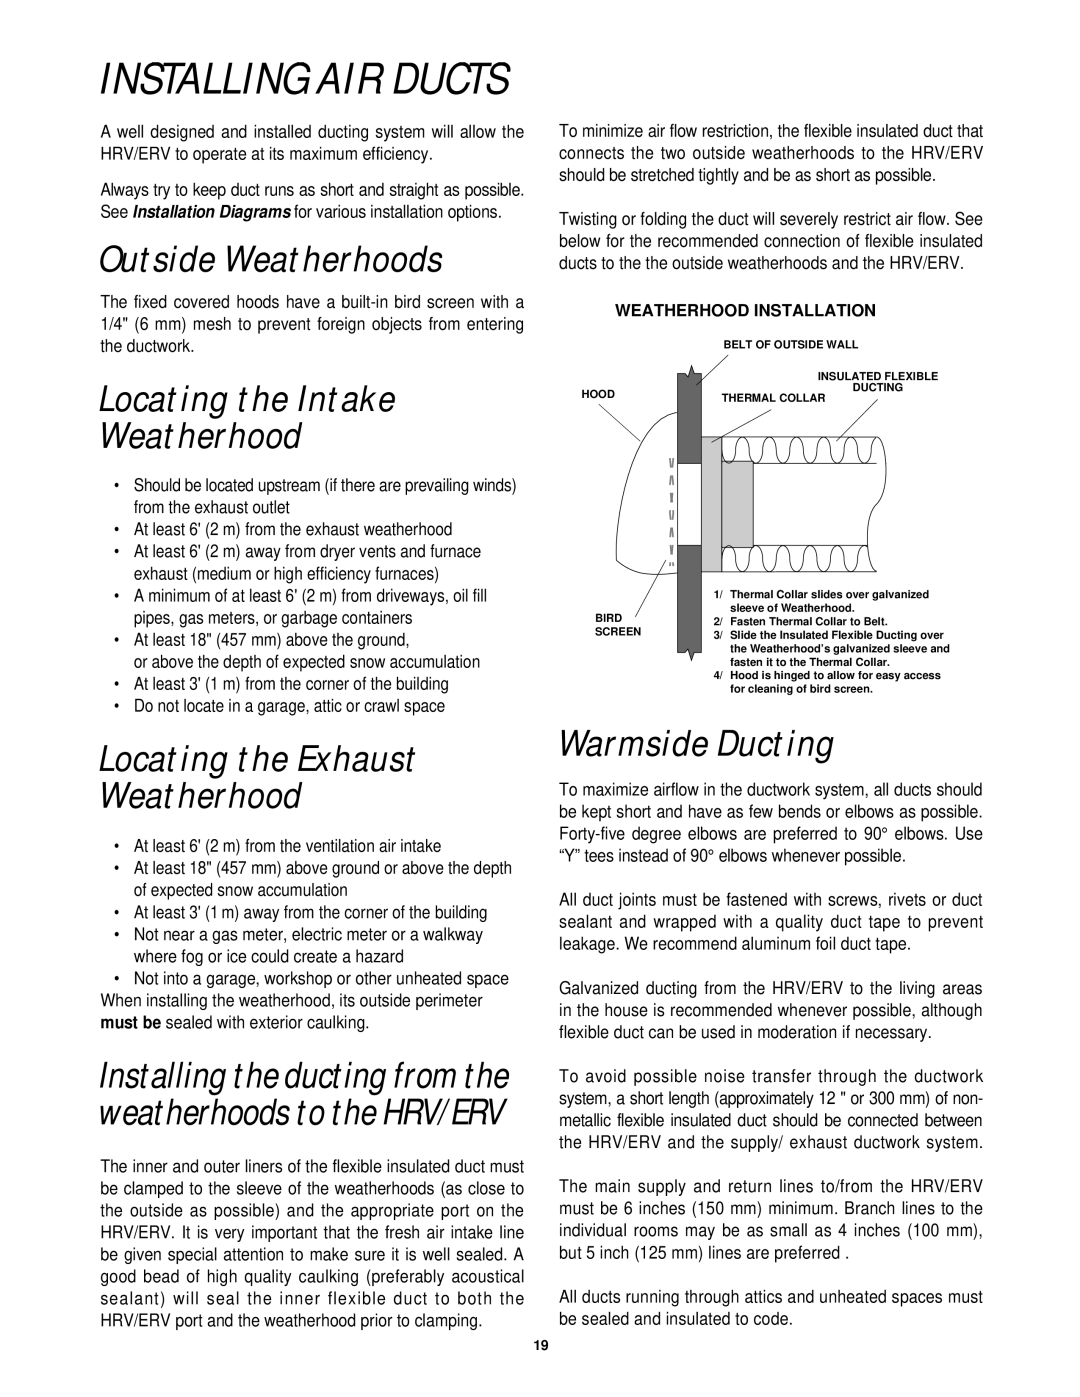 Lifebreath MAXTOP, 200MAX Installing Air Ducts, Outside Weatherhoods, Locating the Intake Weatherhood, Warmside Ducting 